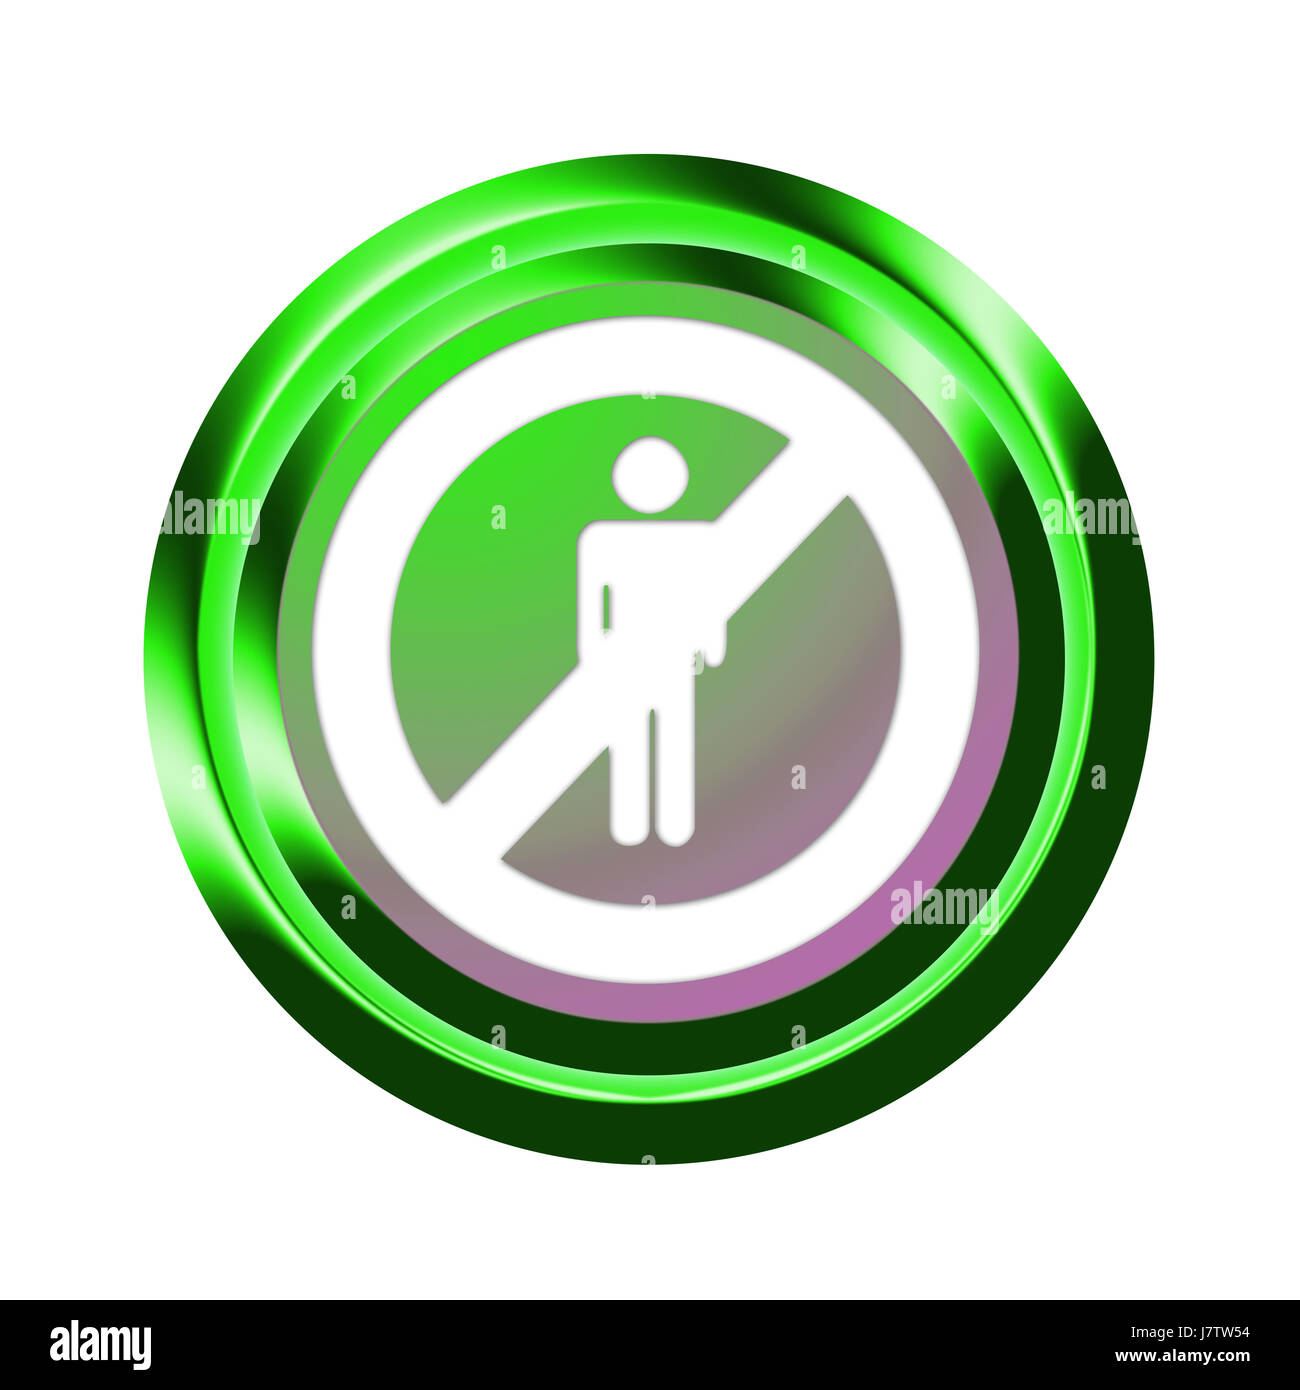 Ziel Durchgang Tor Archgway Gantry Taste Symbolik Verbot illegaler verbotene Stopp Stockfoto